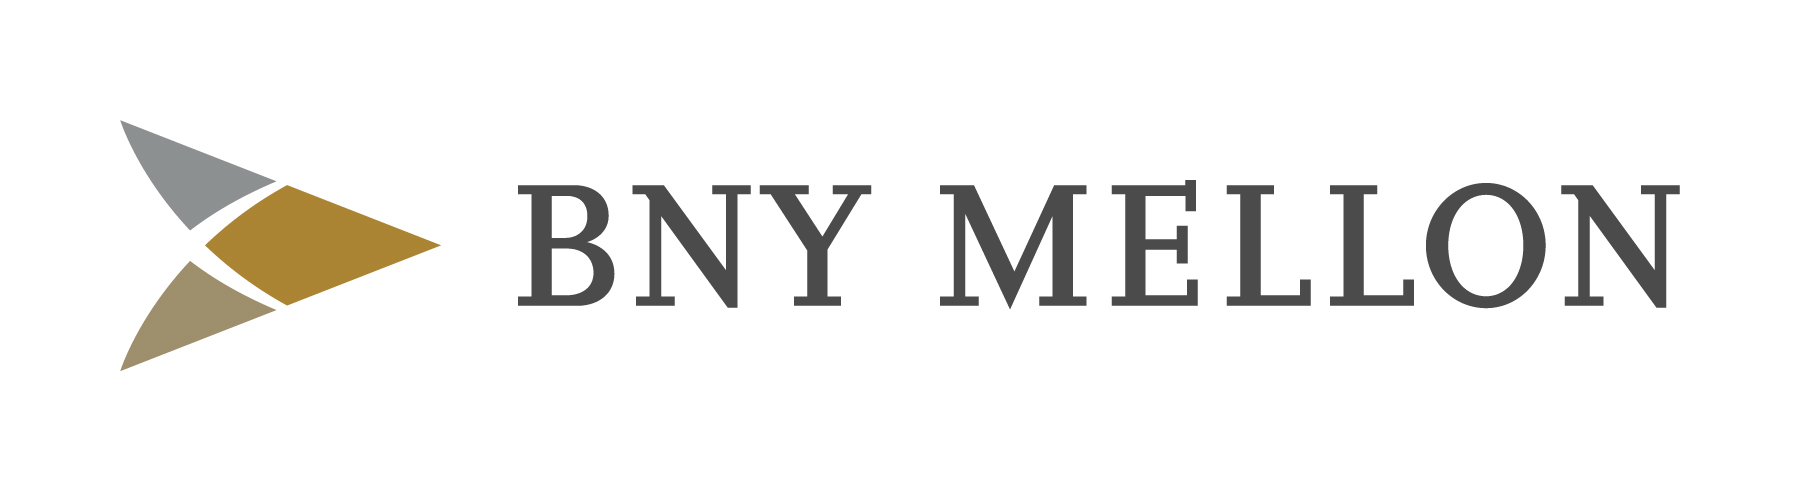 Display Image of BNY Mellon